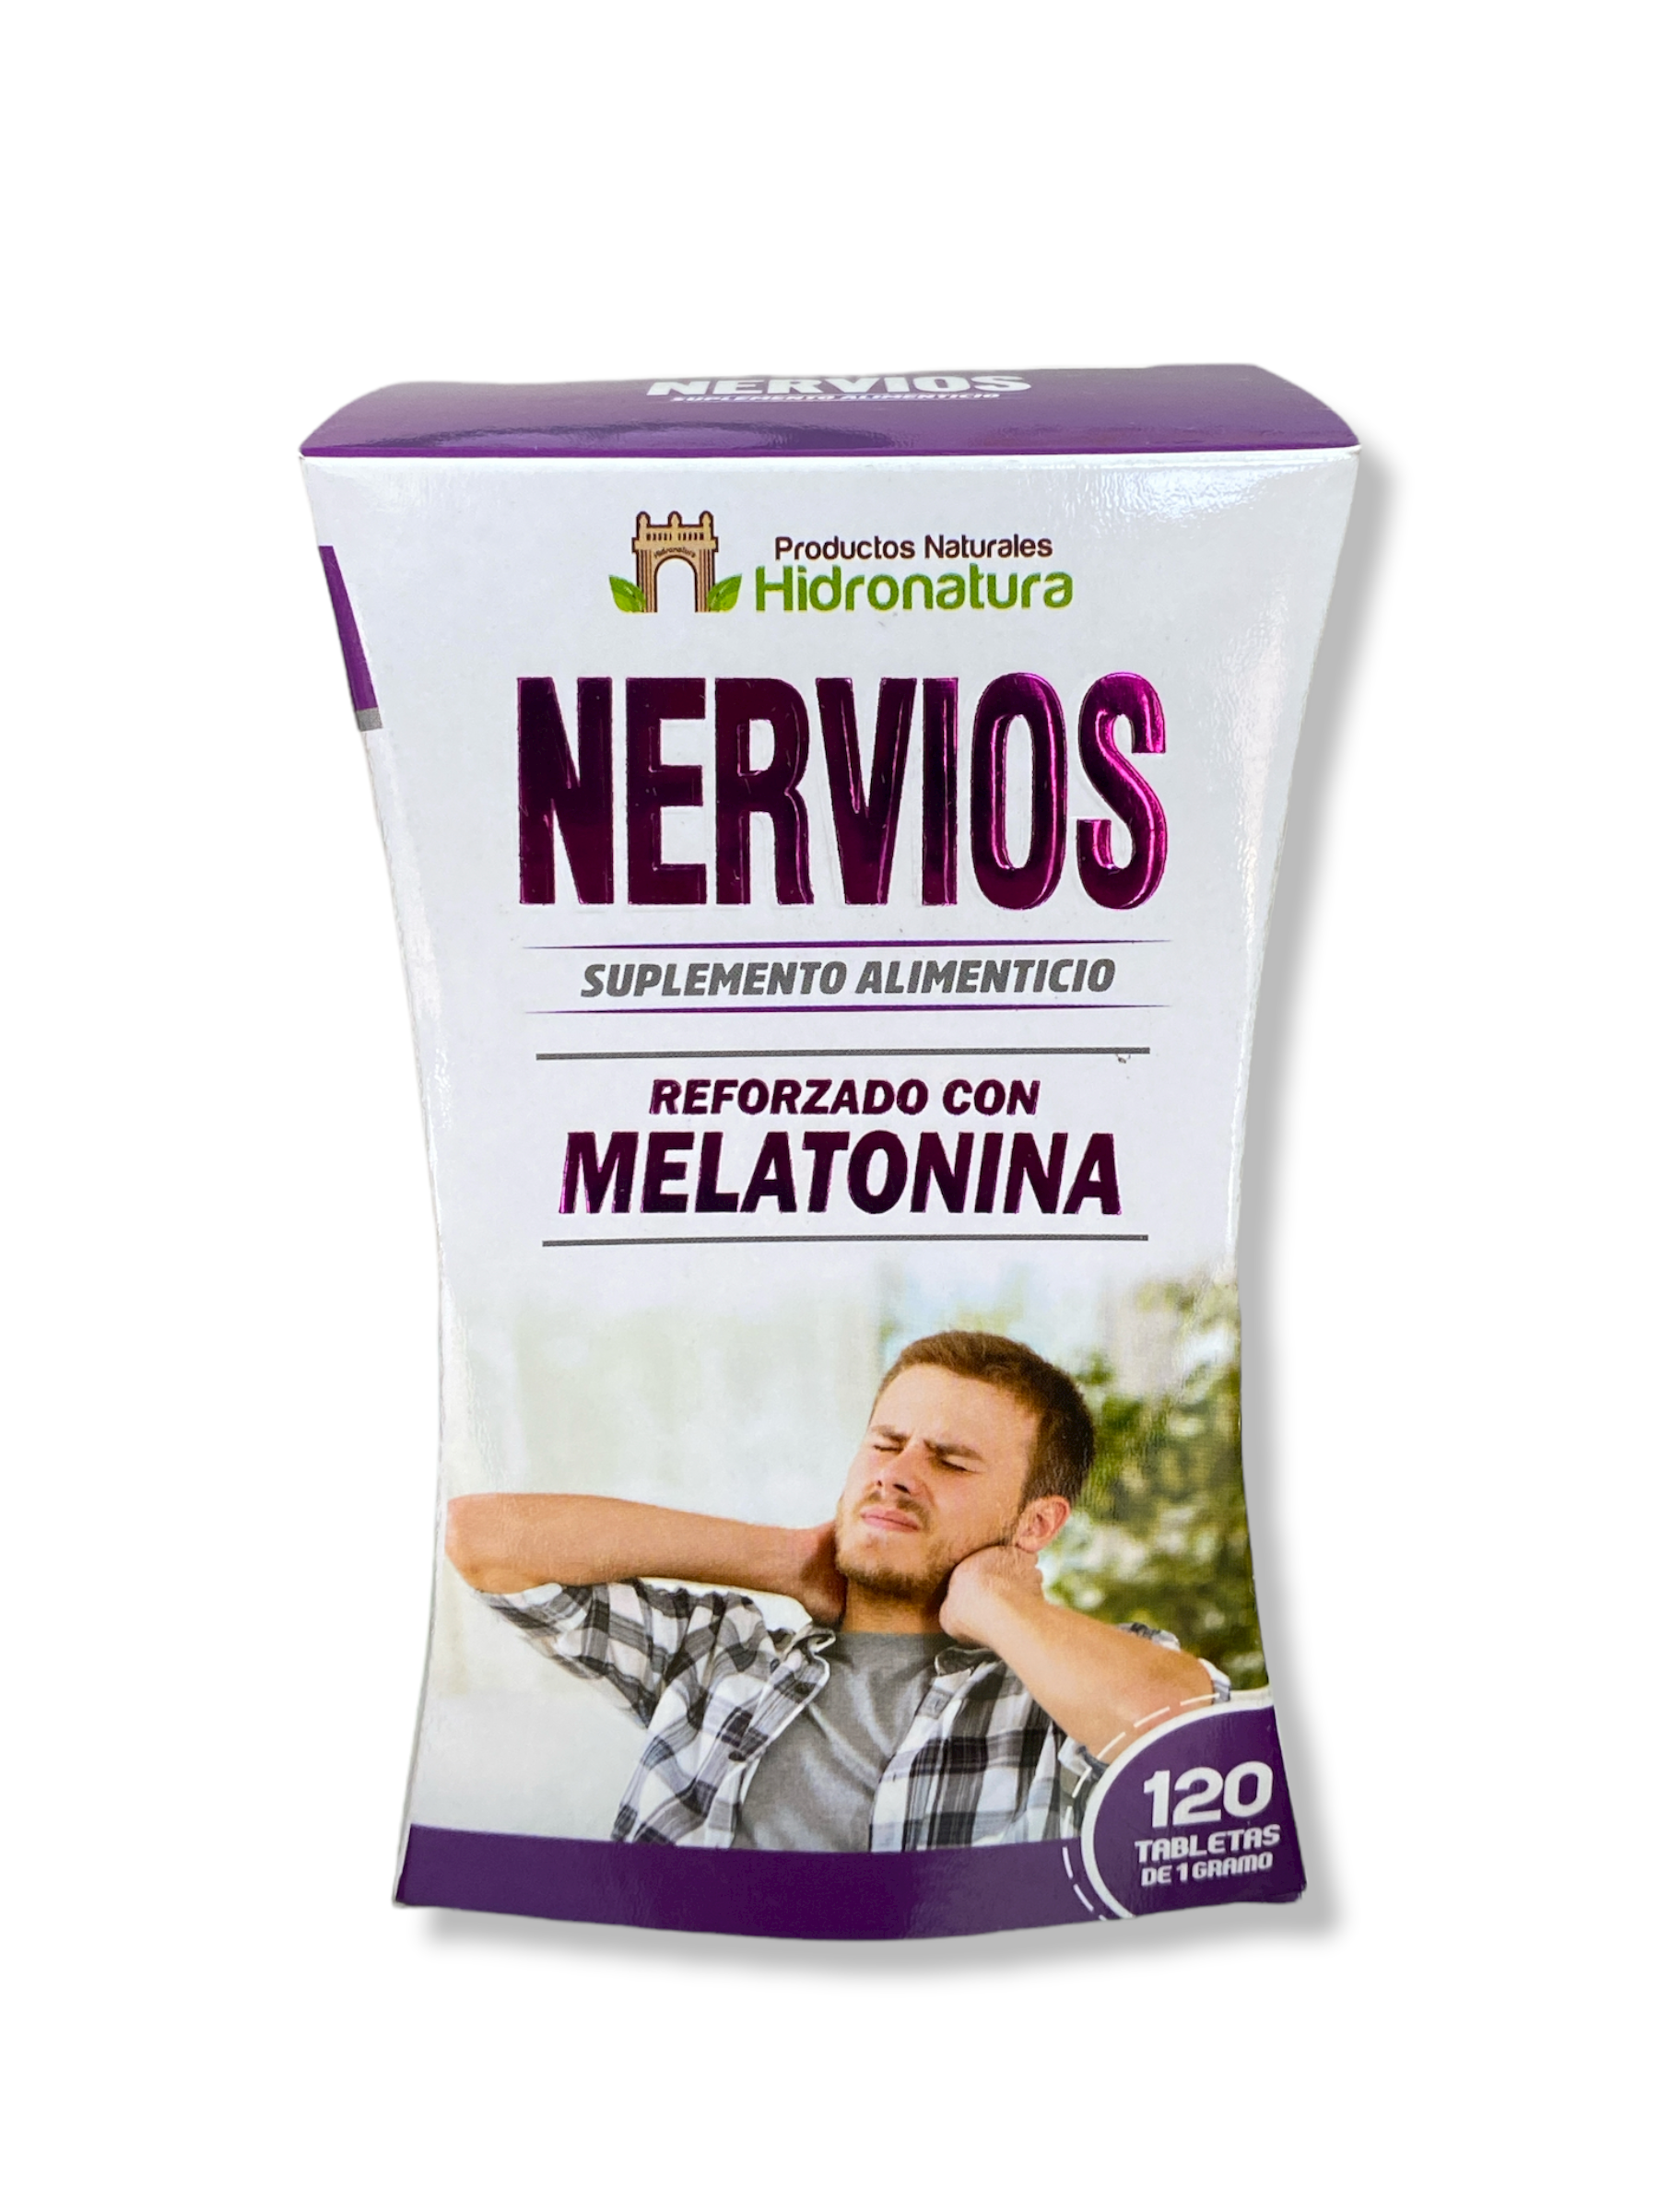 Suplemento alimenticio Nervios reforzado con melatonina 120 tabletas 1 g hidronatura